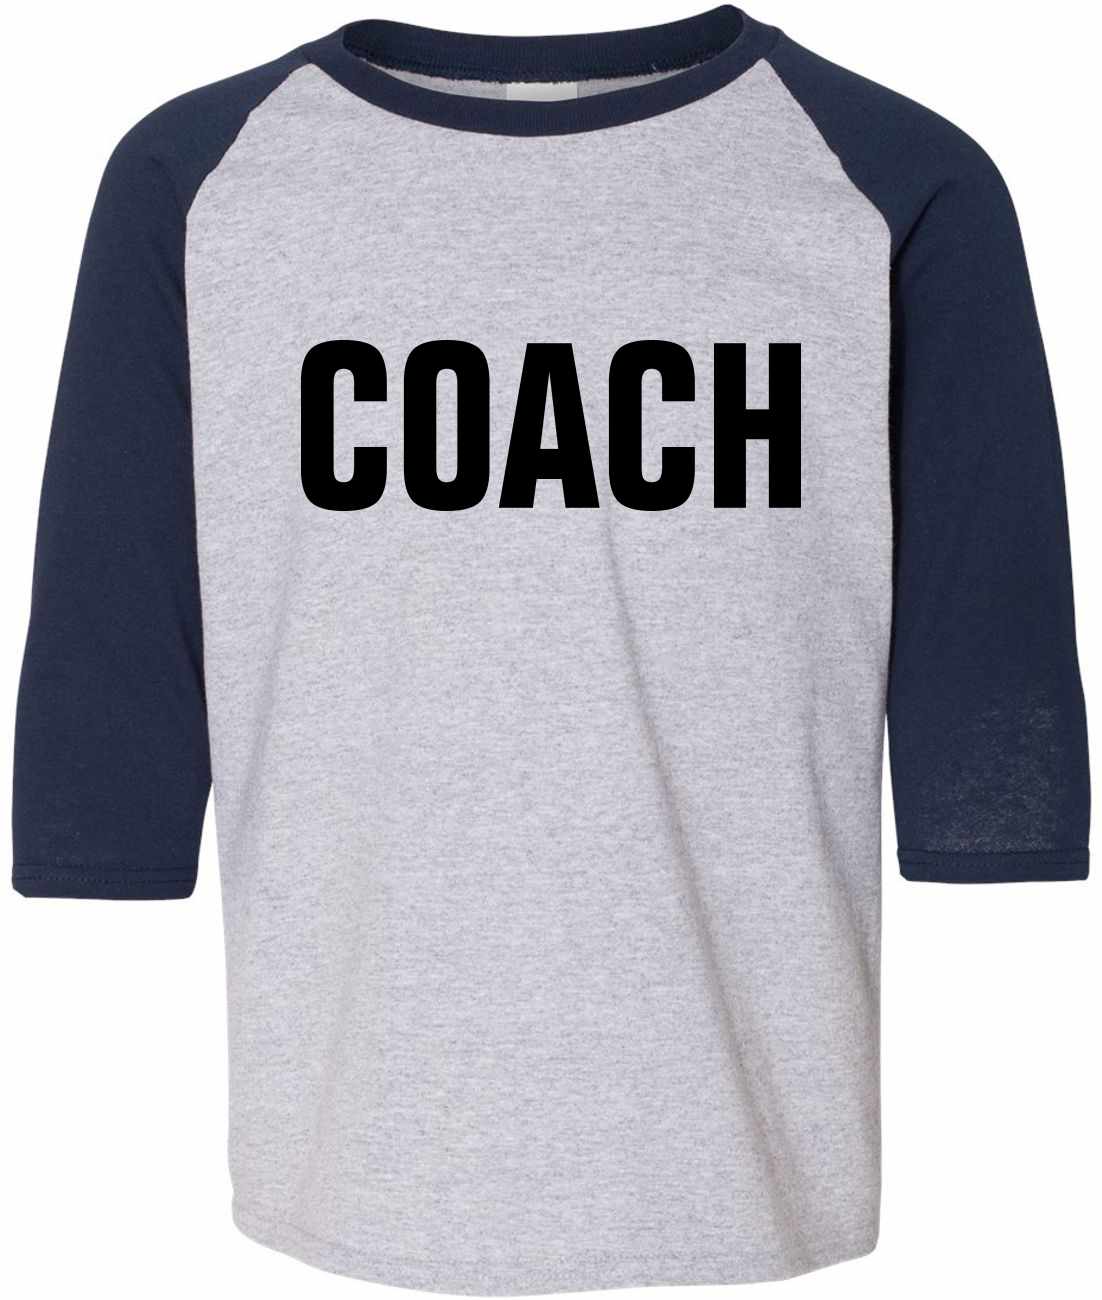 COACH on Youth Baseball Shirt (#406-212)